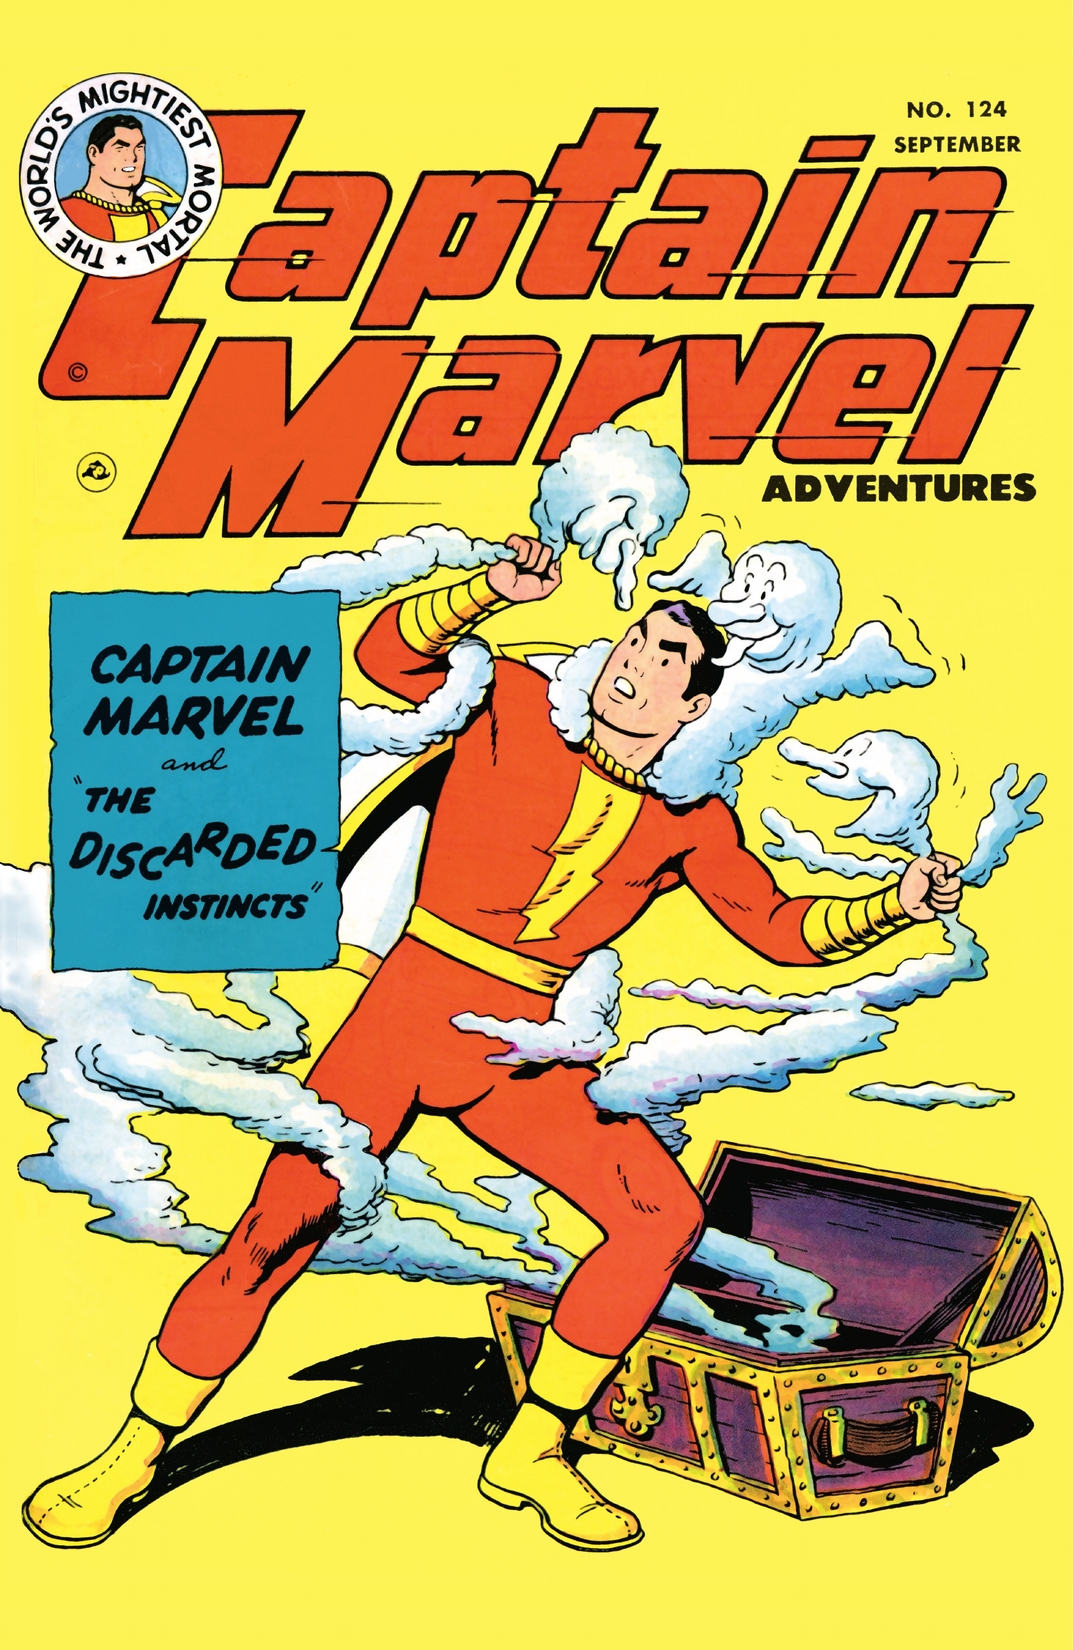 Captain Marvel Adventures #124 preview images